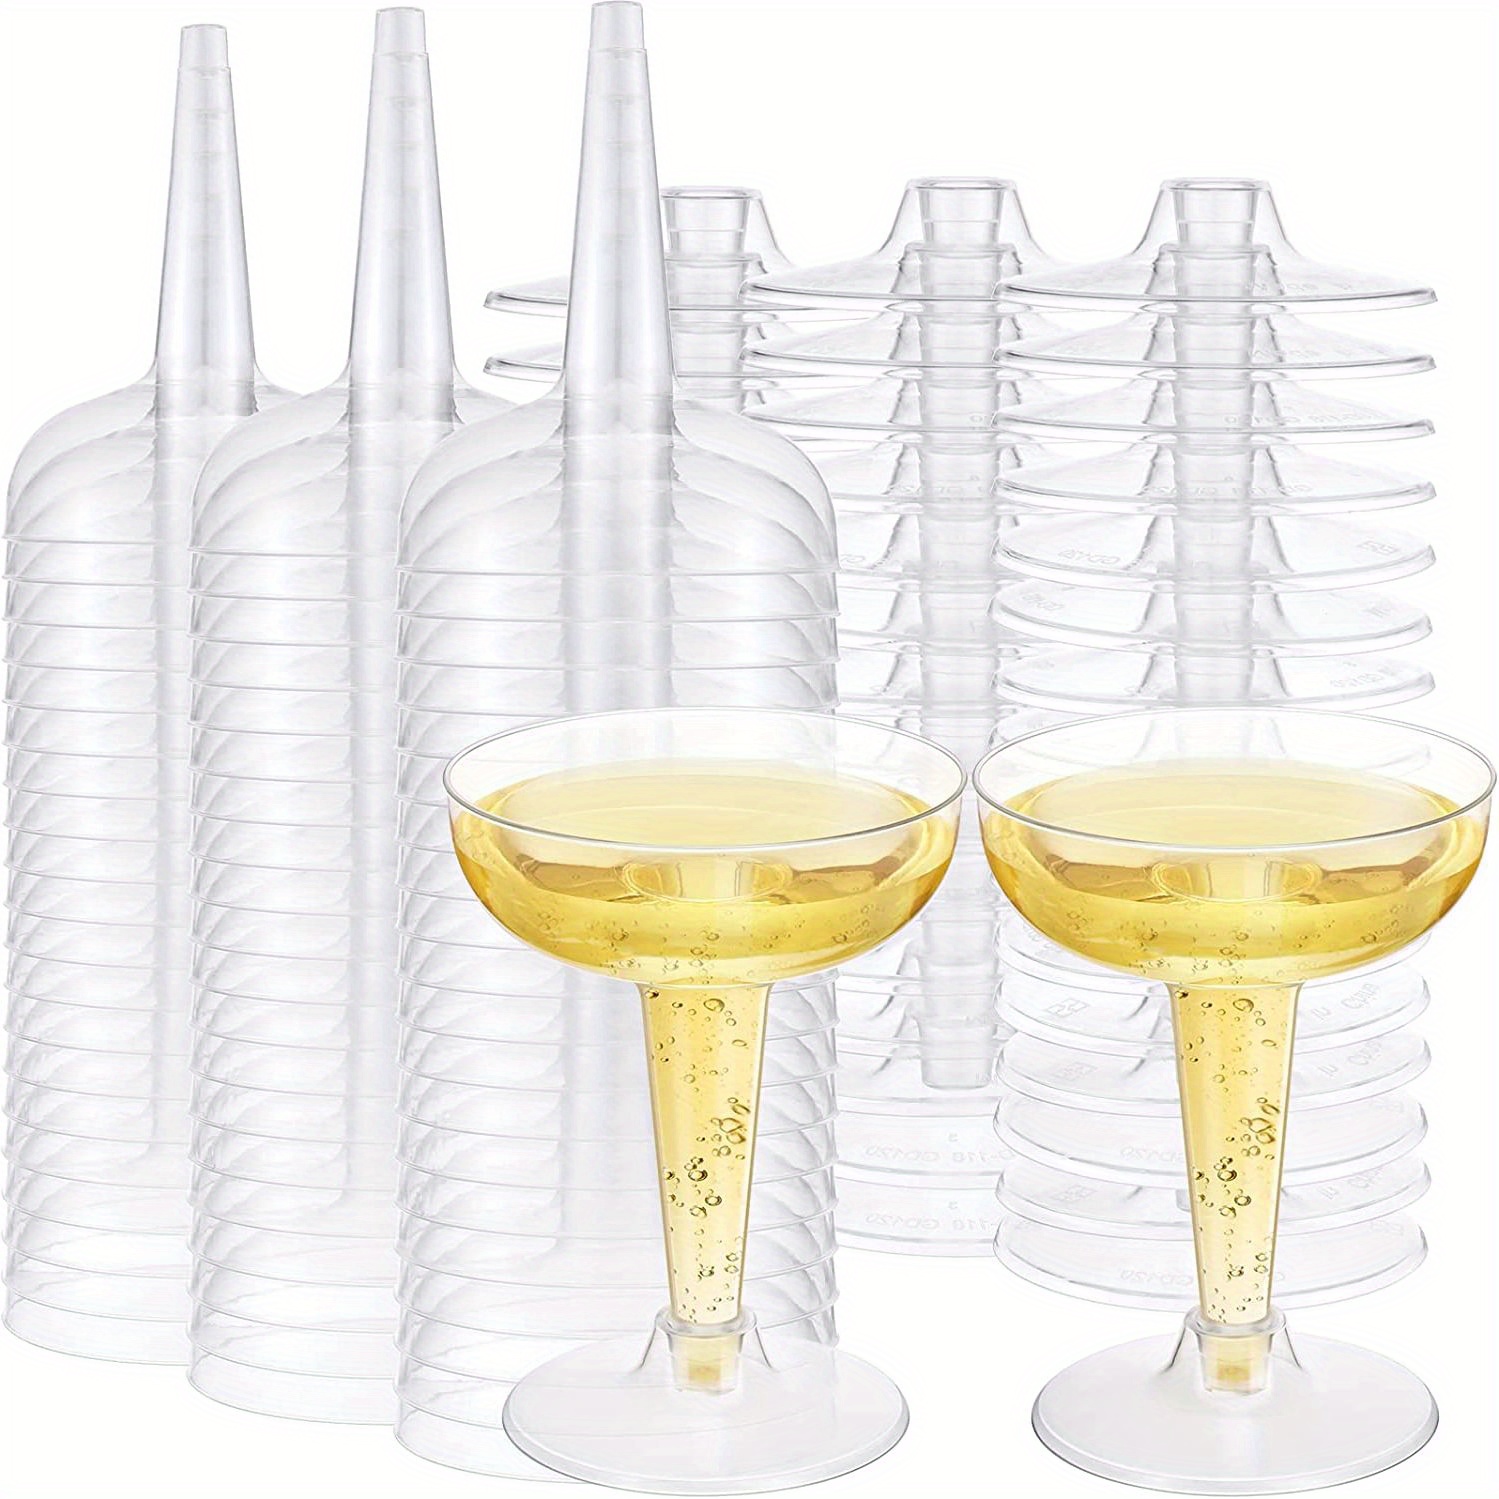 5 CLEAR Mini GLASS CHAMPAGNE COUPES DESSERT GLASSES